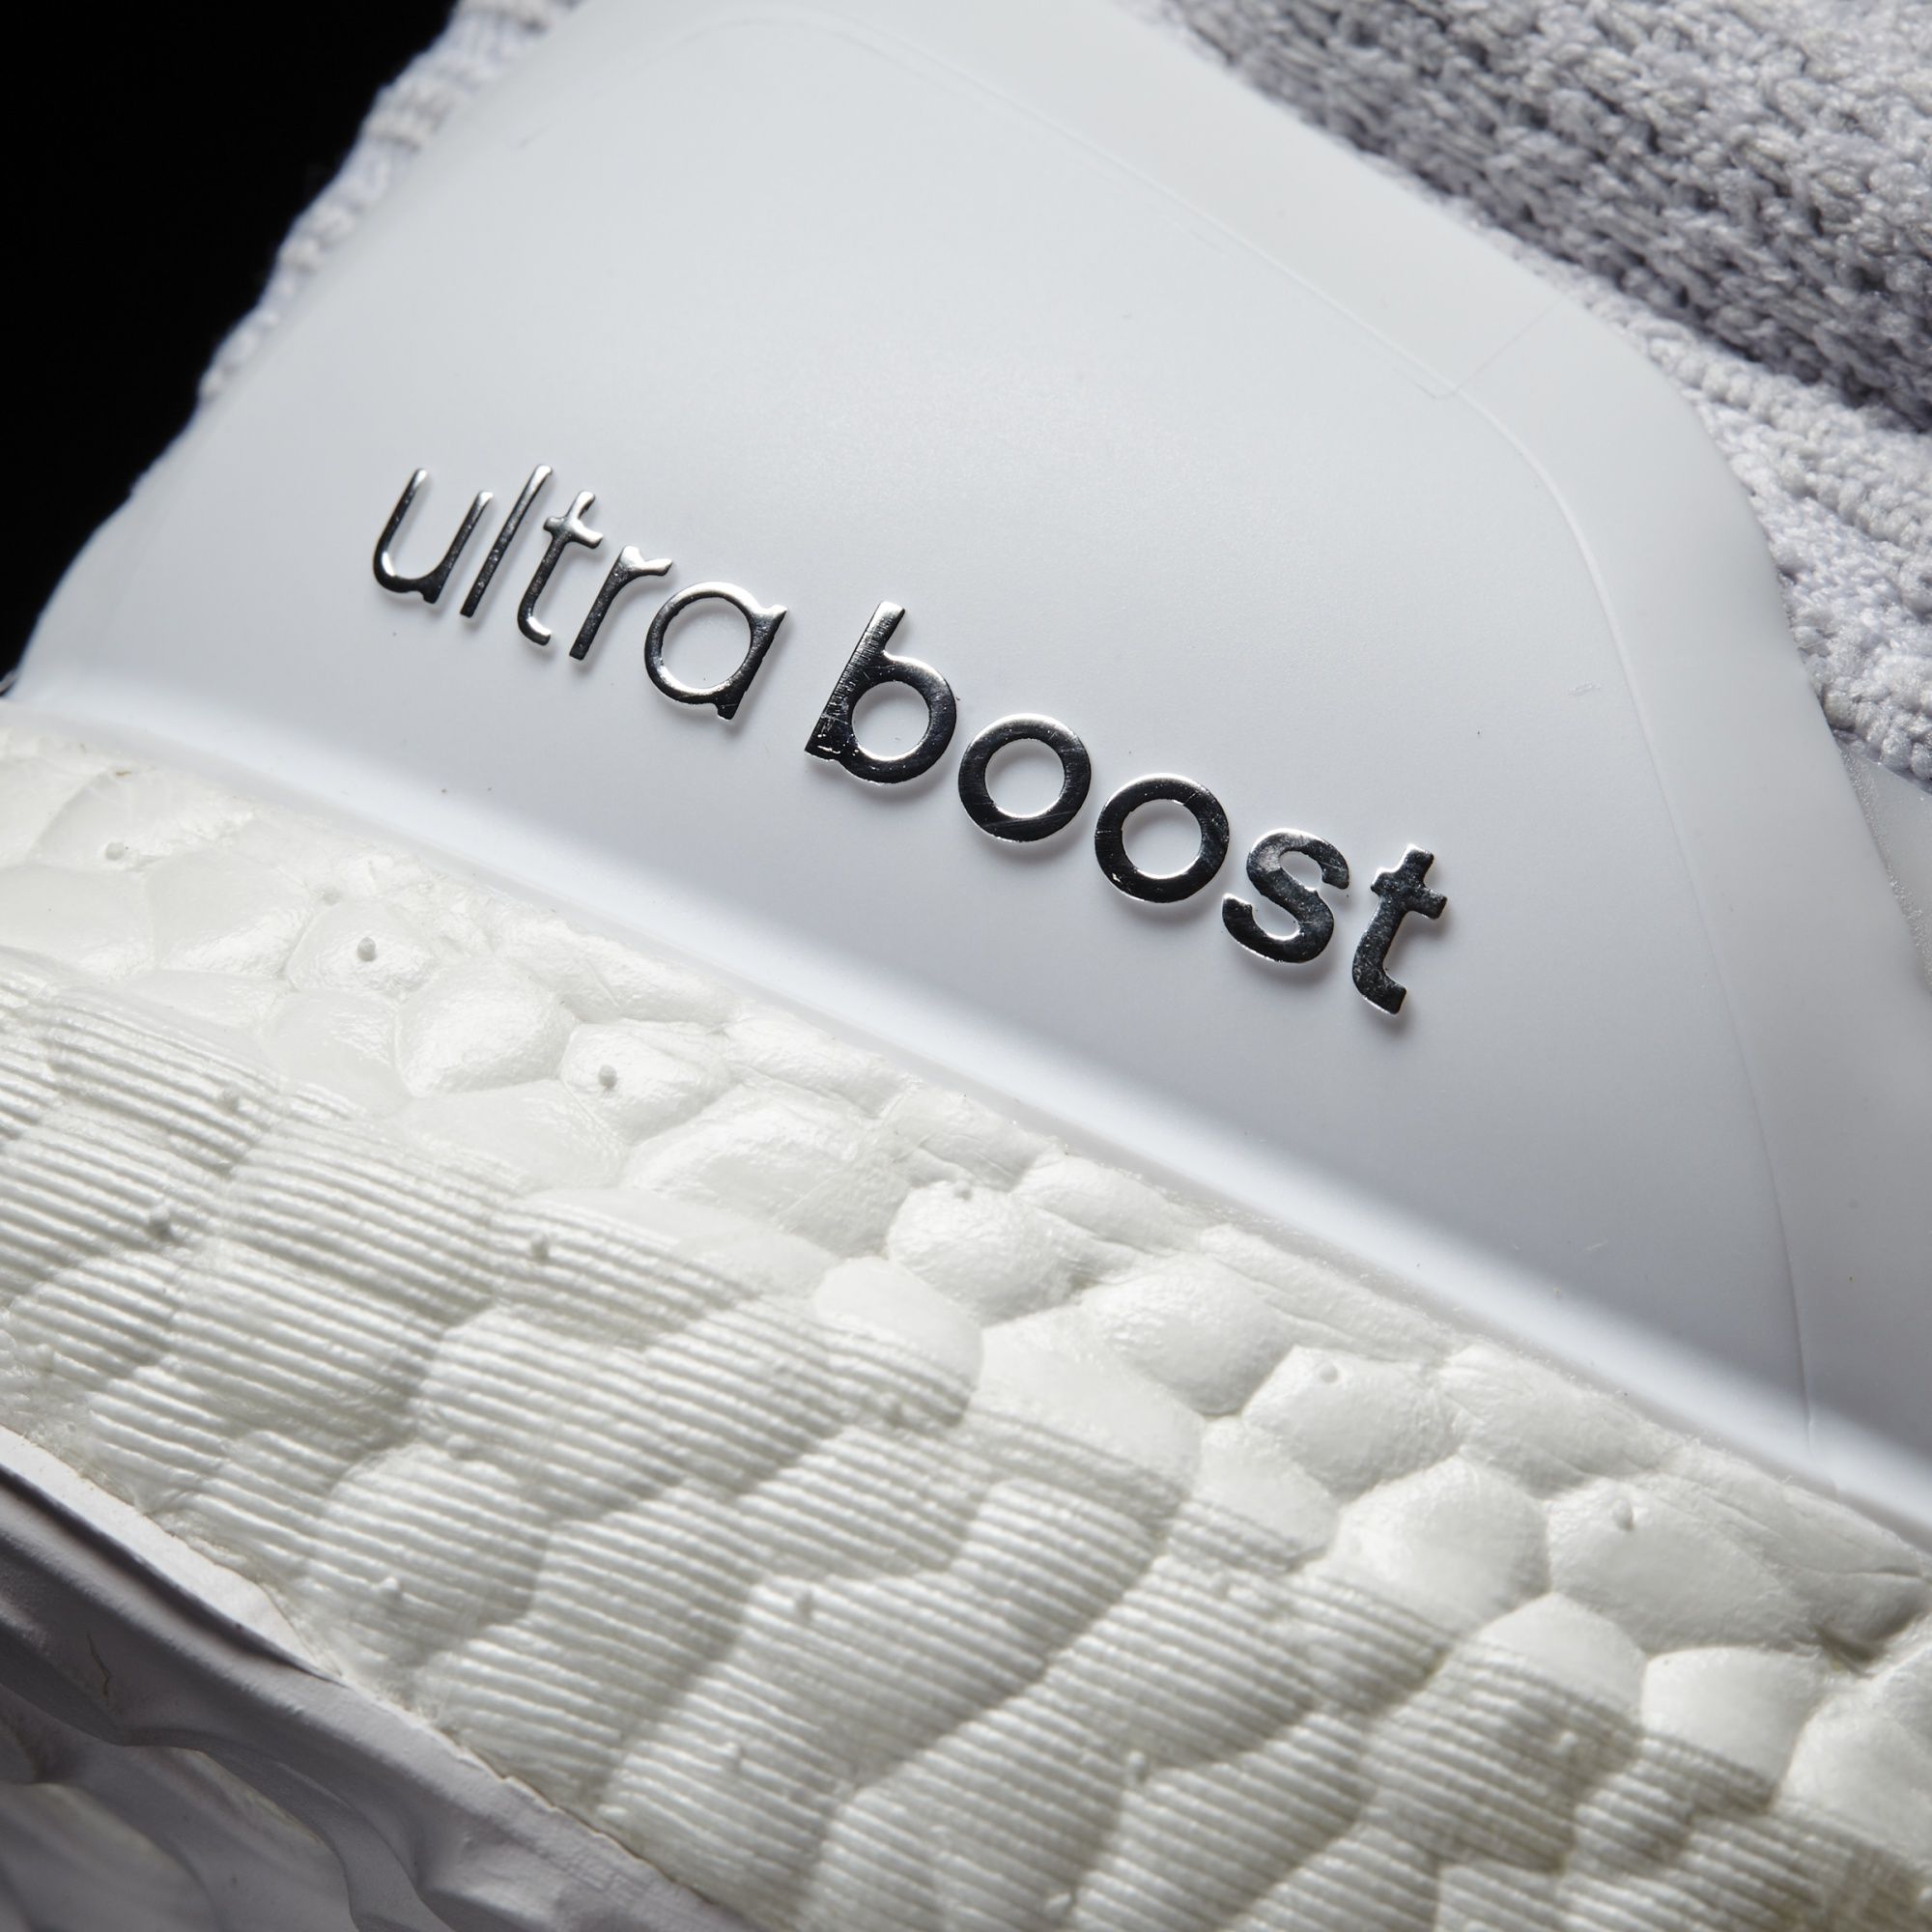 Adidas Ultra Boost 3.0
Footwear White / Crystal White